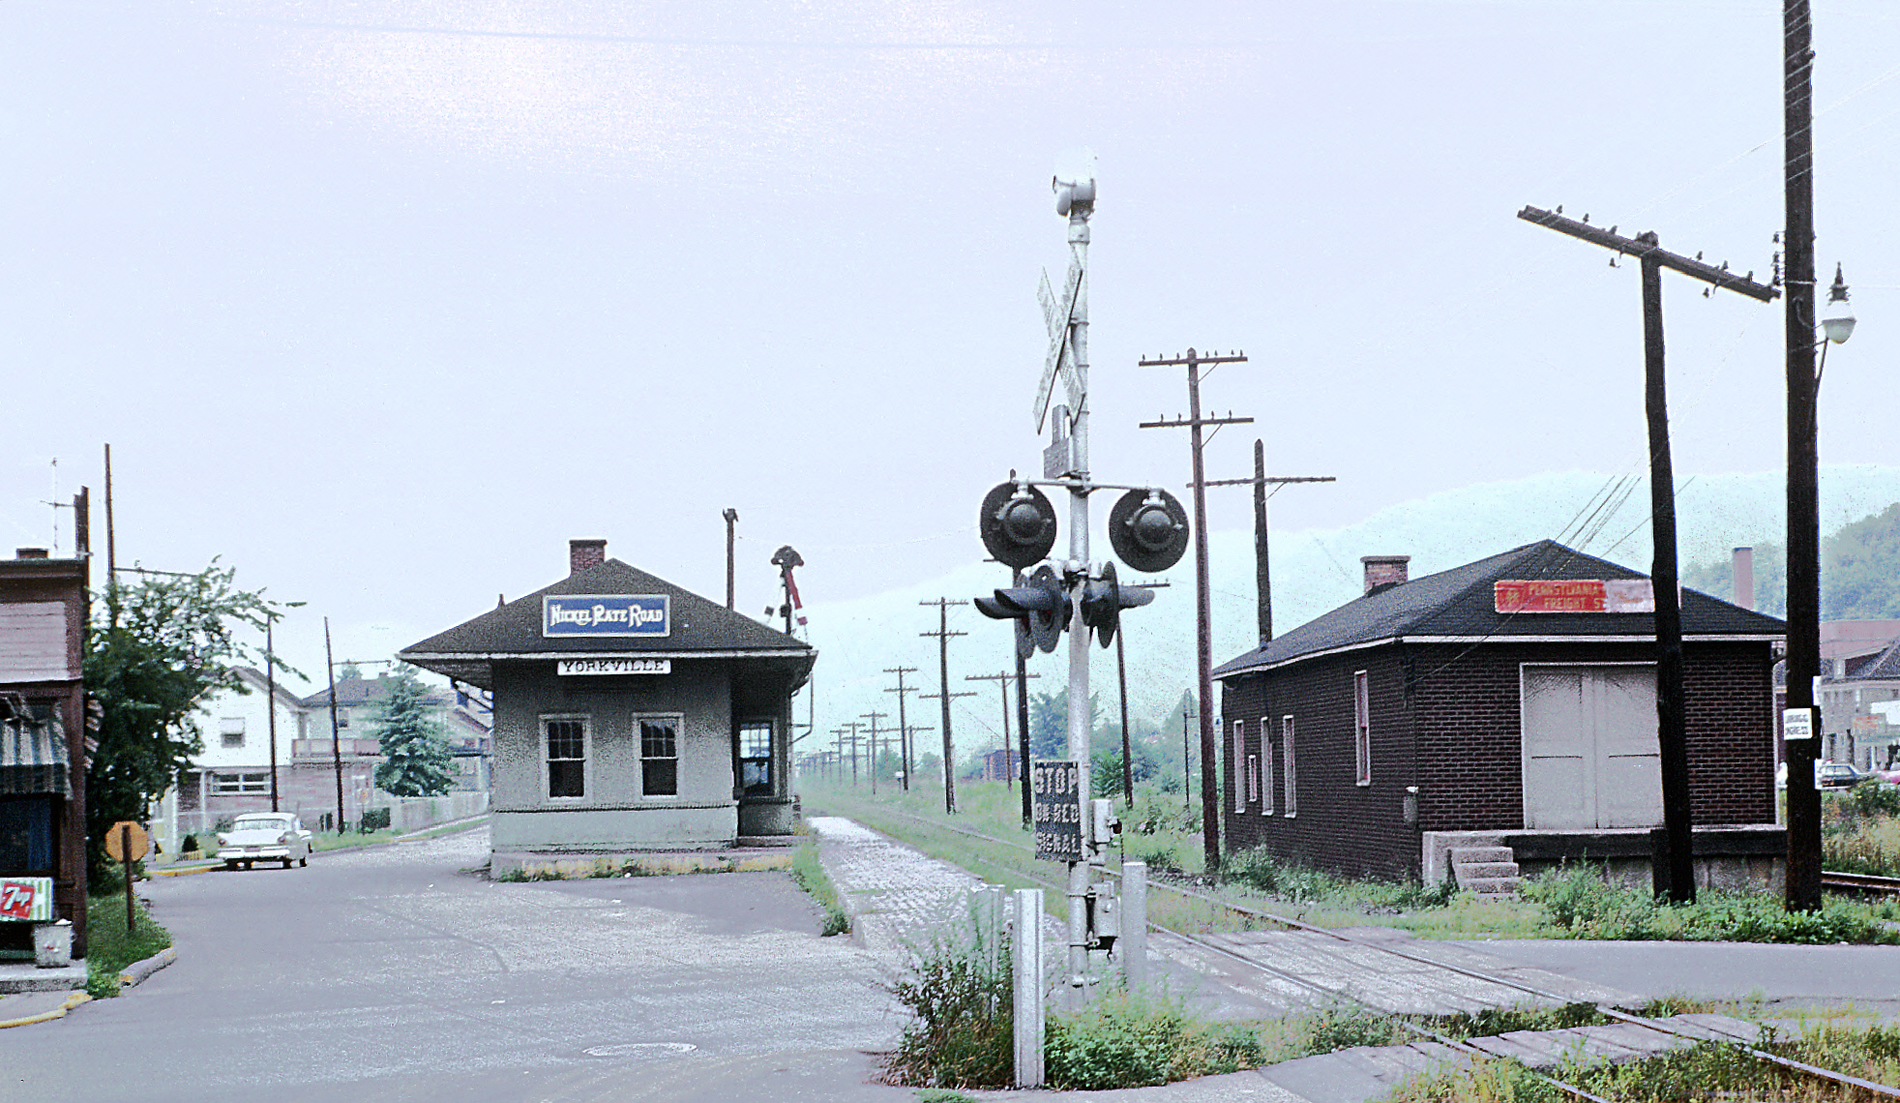 Details about   Vintage Old OHIO Postcard Akron Union Train Station Railroad Depot Amelia Flats 